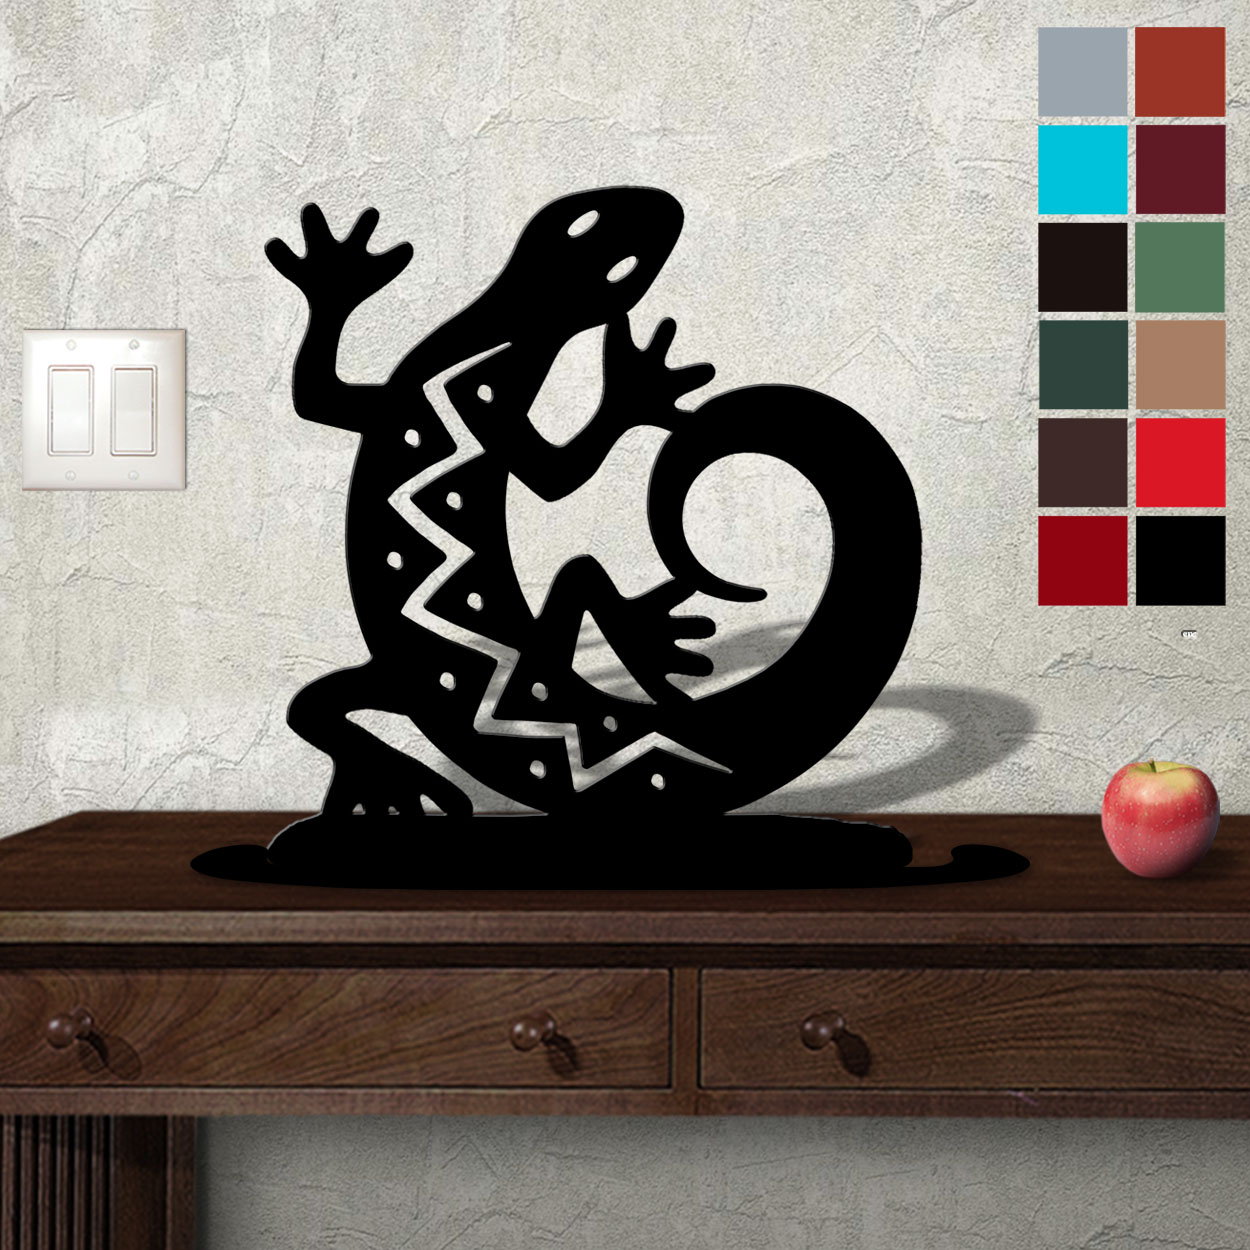 623009 - Tabletop Metal Sculpture - 18in W x 20in H - C Gecko - Choose Color